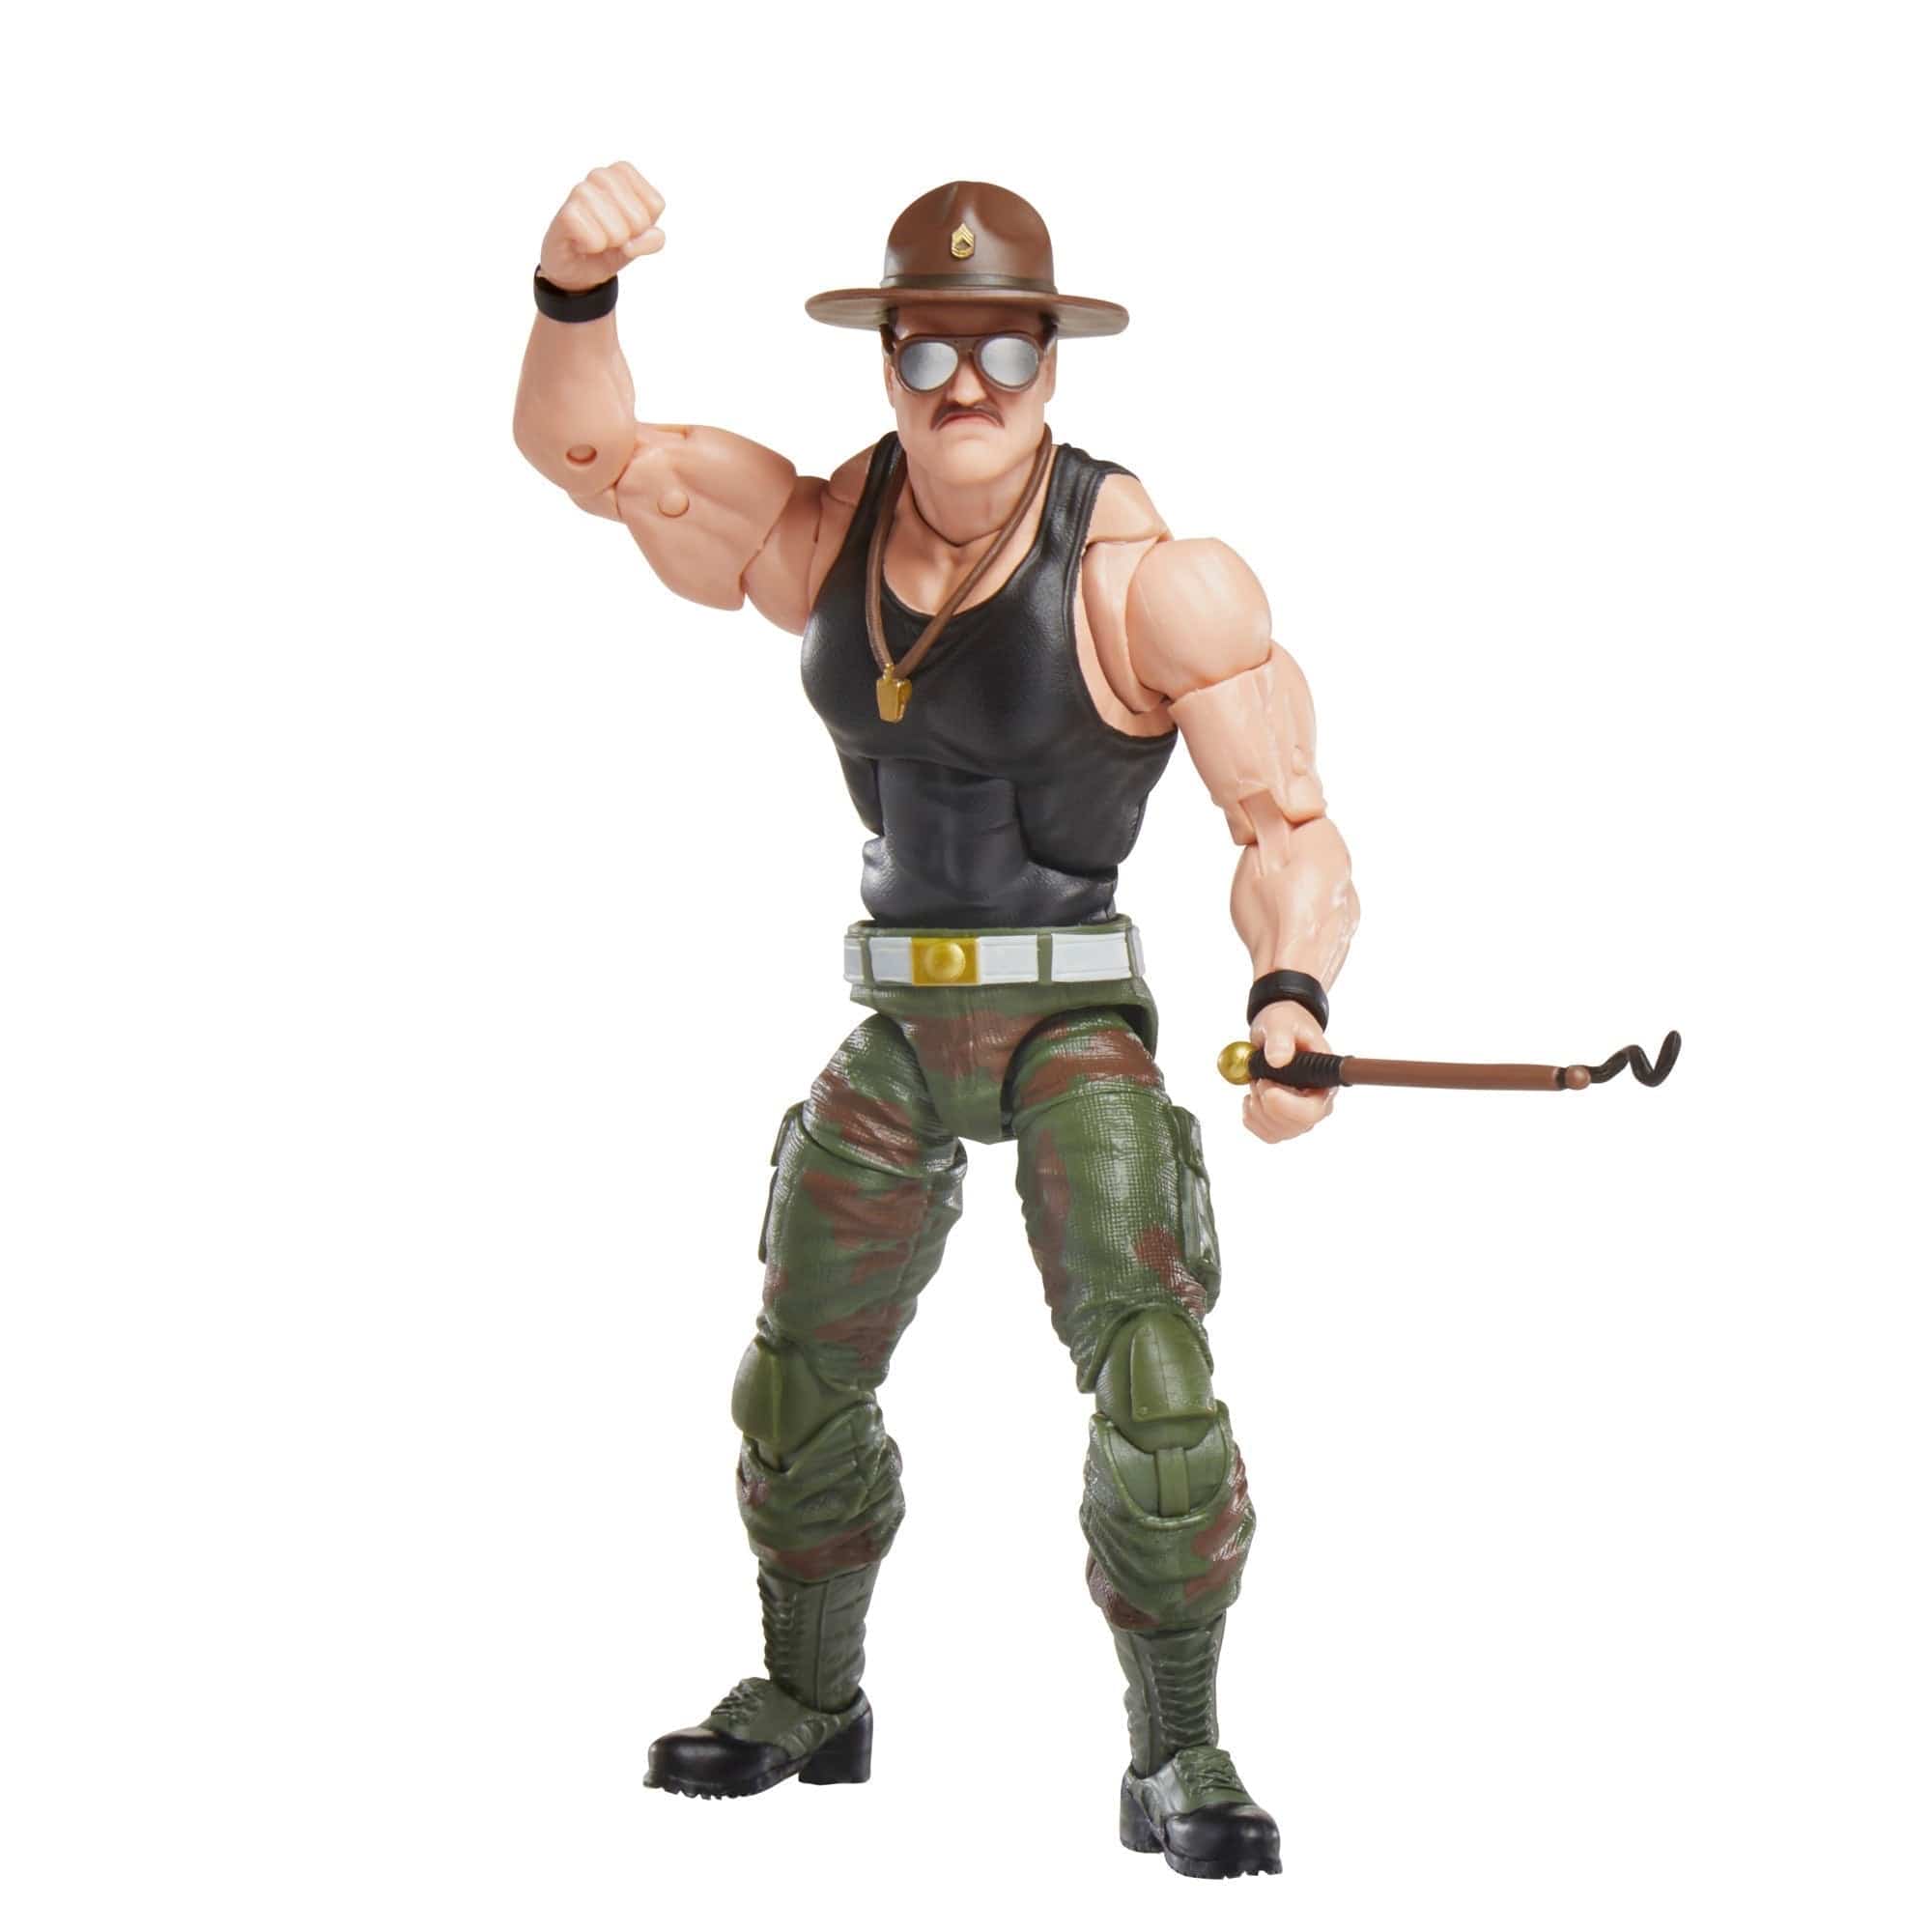 Hasbro G.I. Joe Classified Series Sgt. Slaughter Action Figure